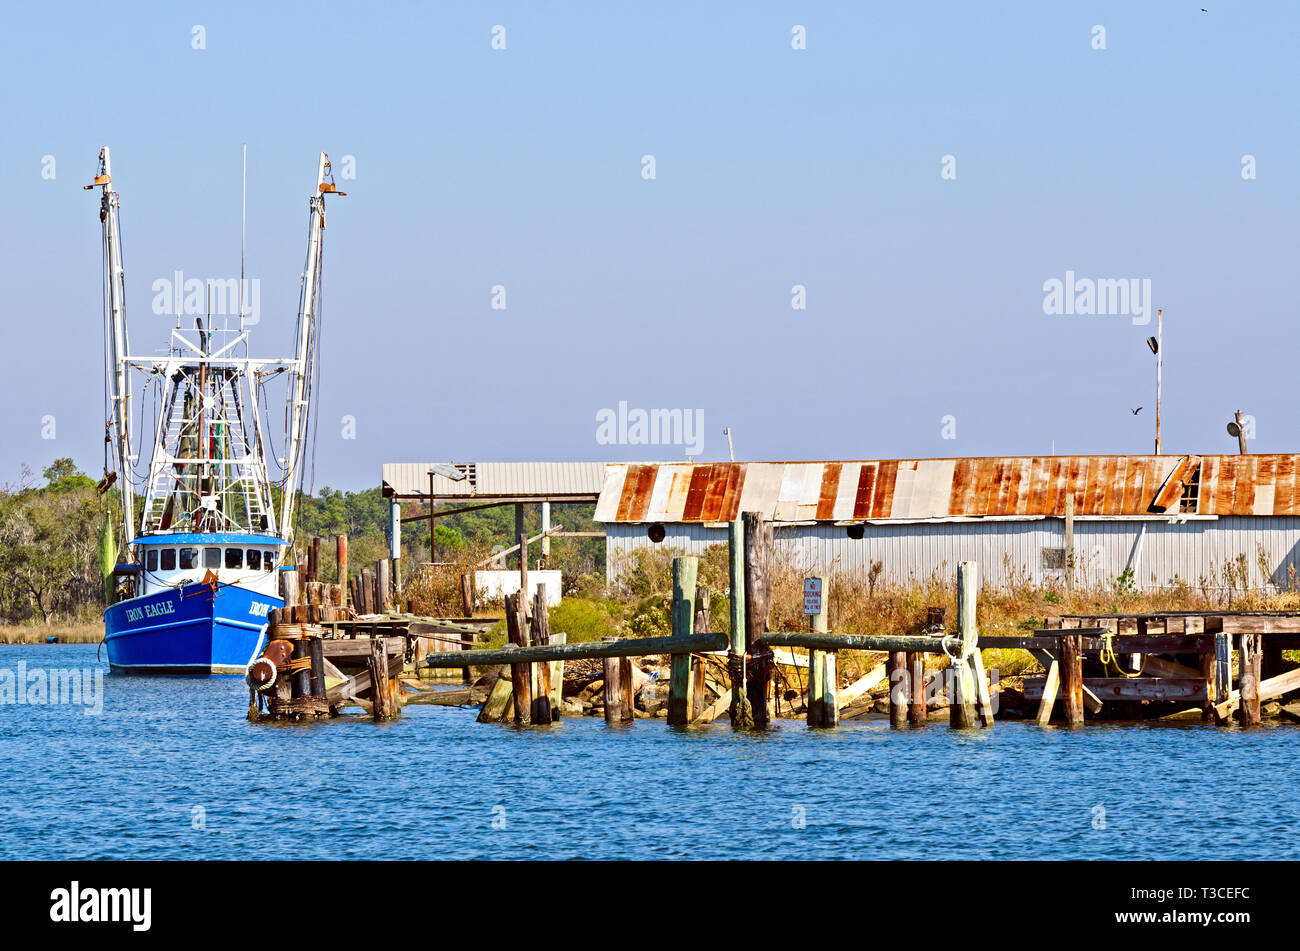 A shrimp boat, the Iron Eagle, is docked at a wharf at the Bayou La Batre State Docks in Bayou La Batre, Alabama, Nov. 23, 2012. Stock Photo